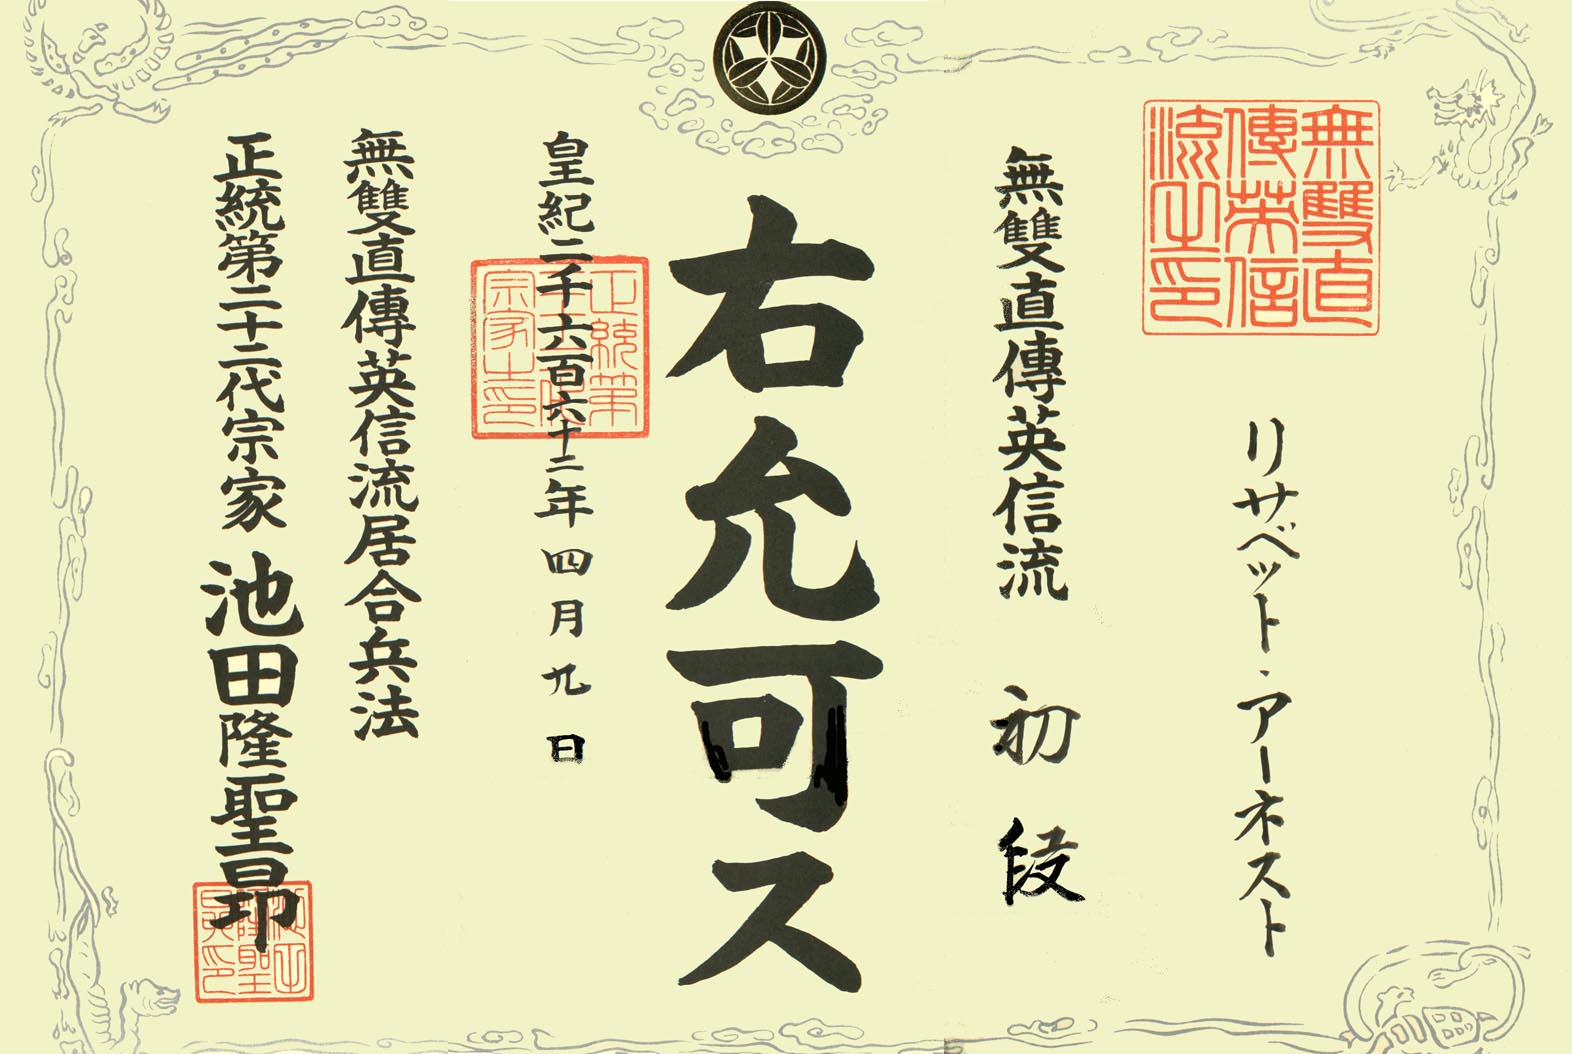 Jikishin-Kai International: About Us—History, Purpose, and Philosphy